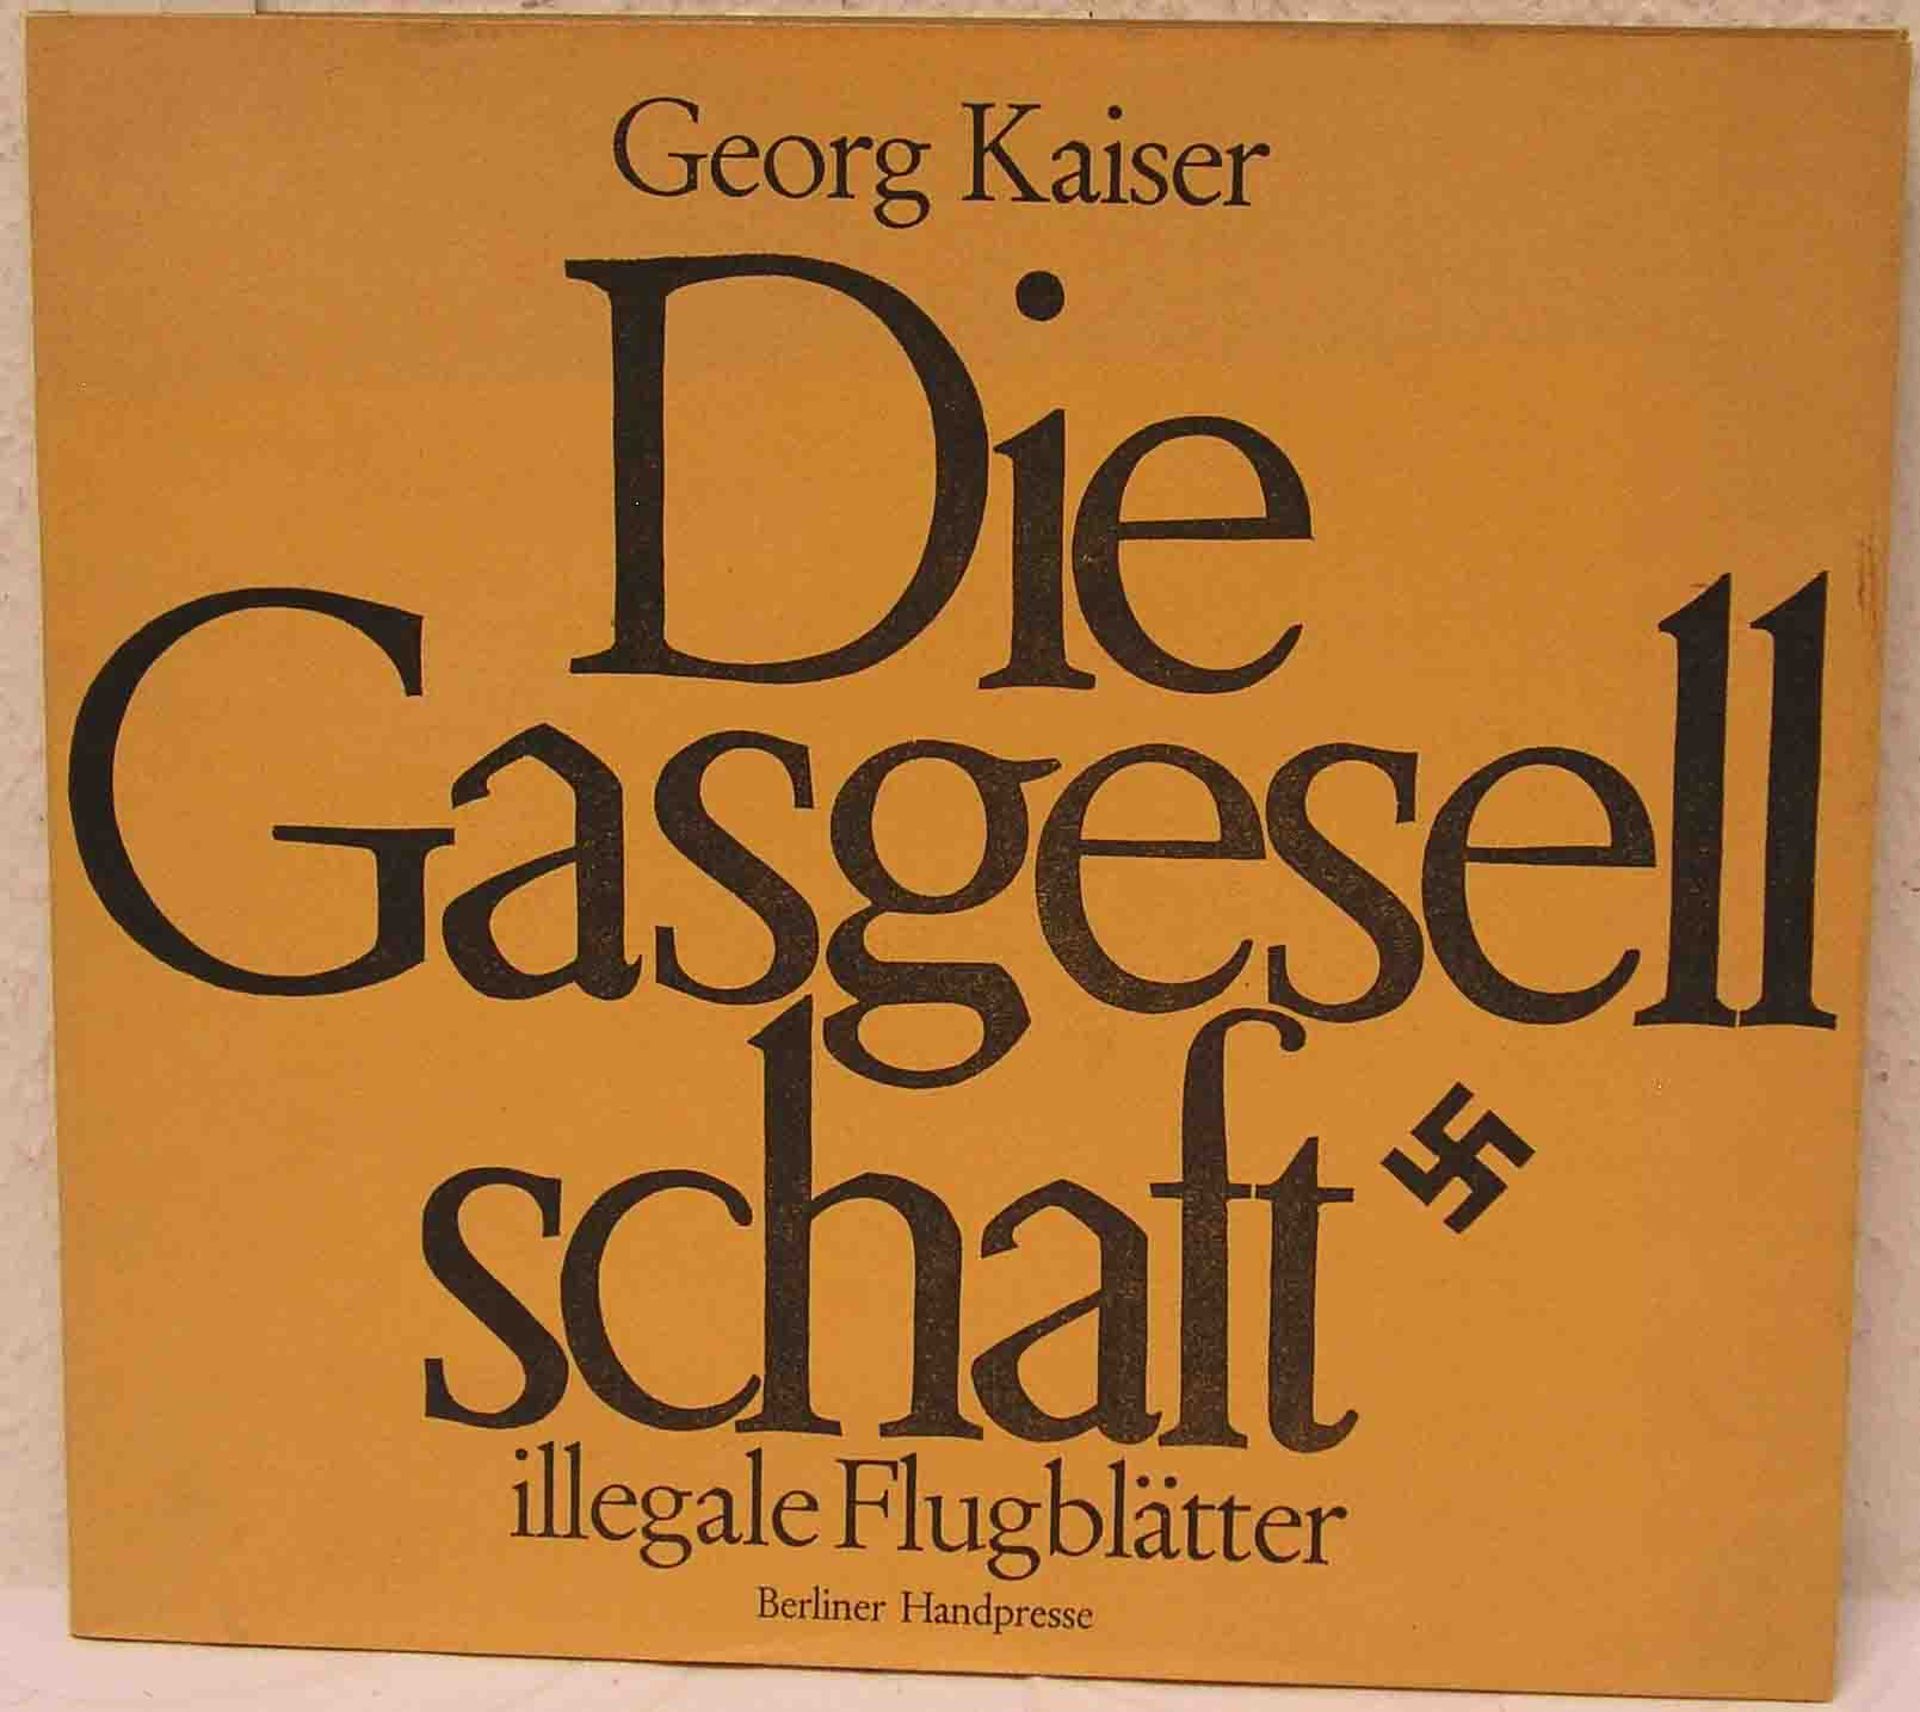 Kaiser Georg "Die Gasgesellschaft"